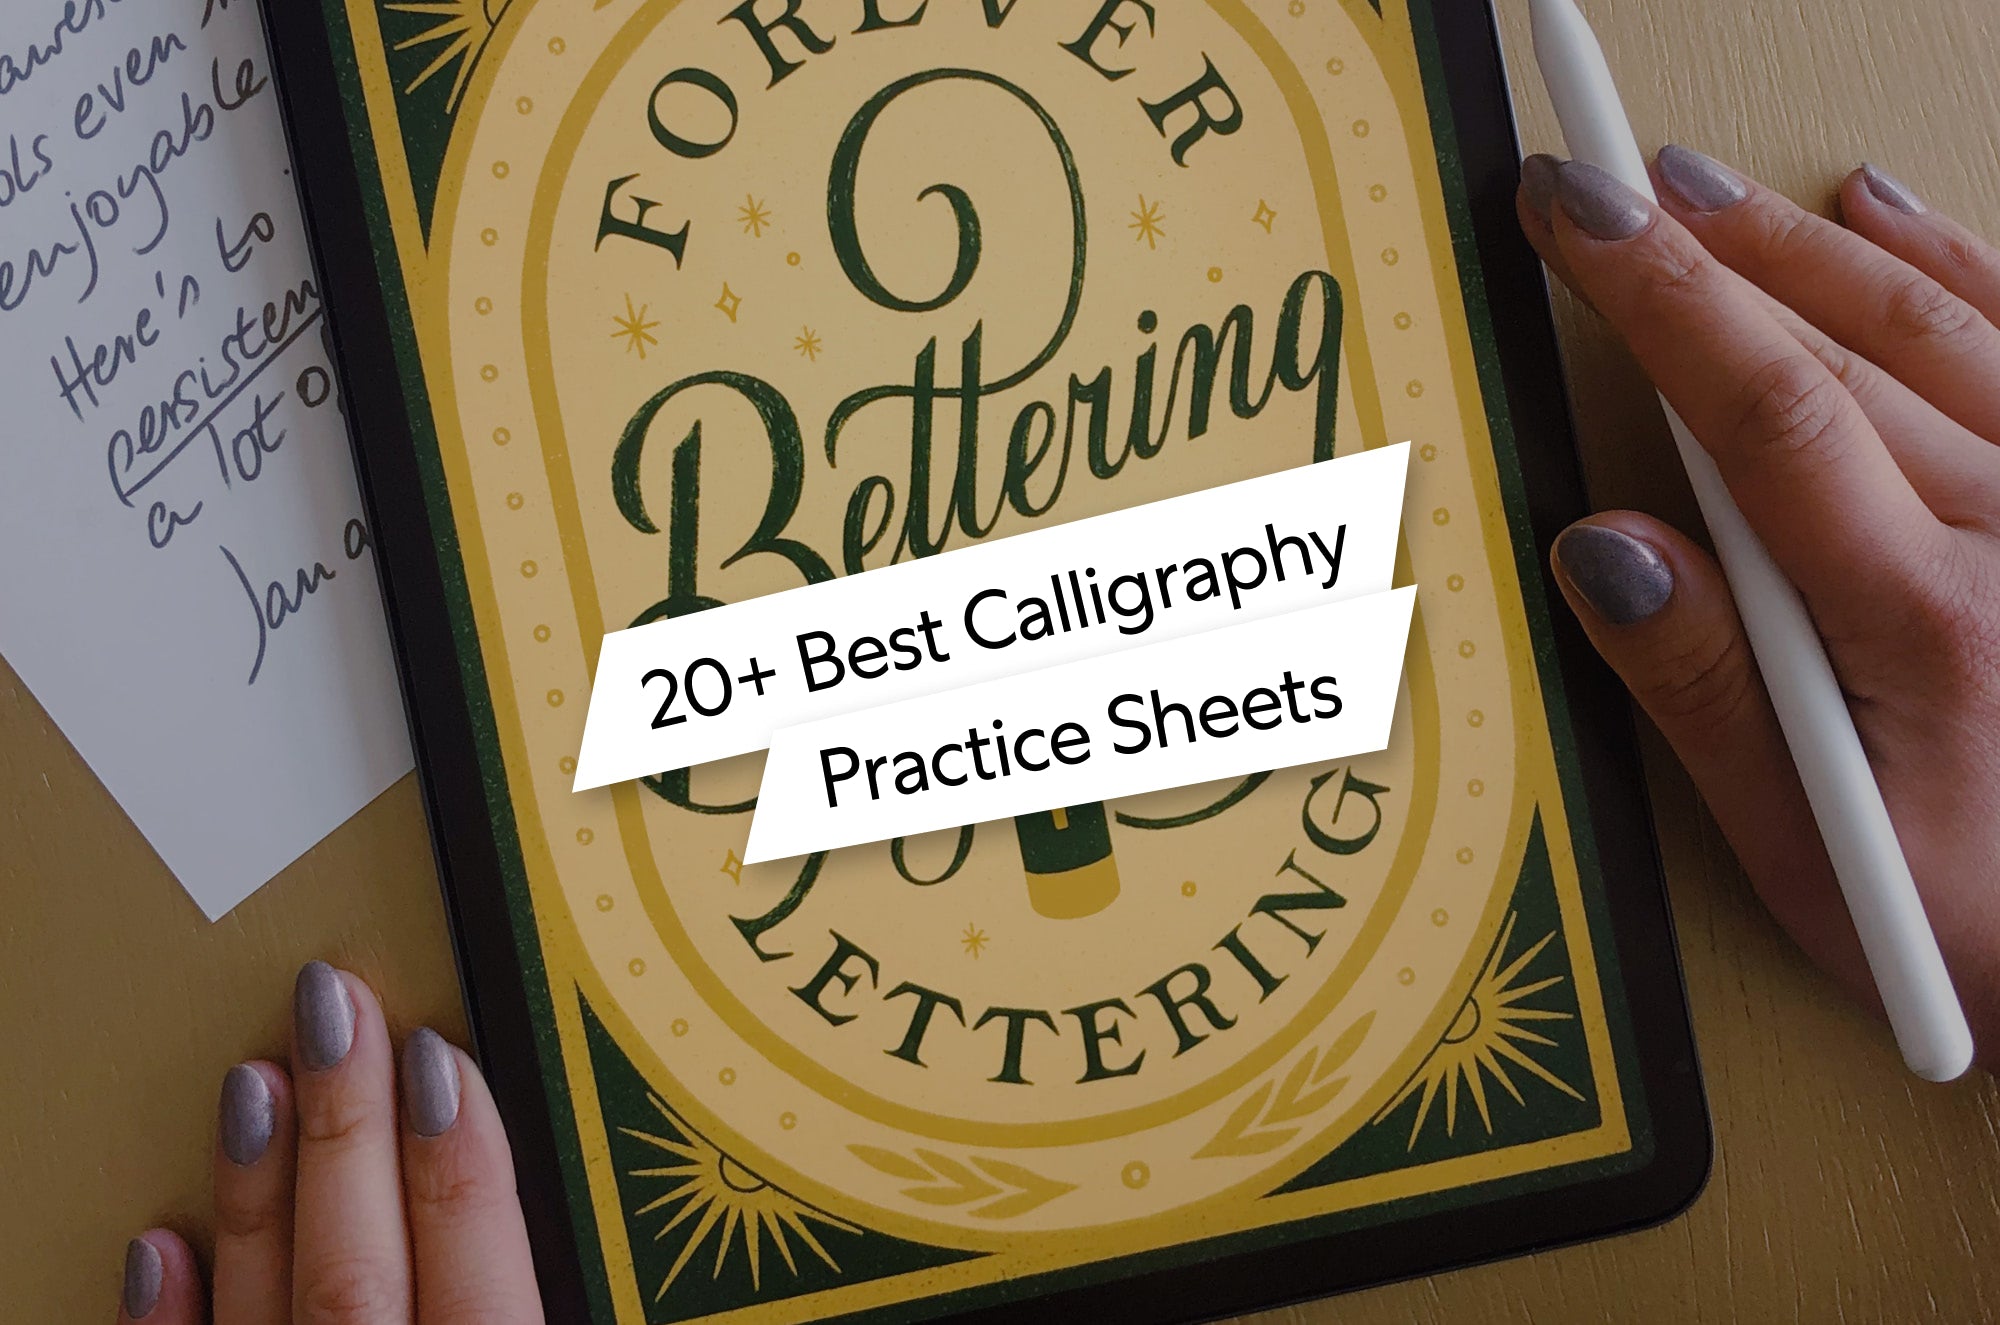 20+ Best Calligraphy Practice Sheets